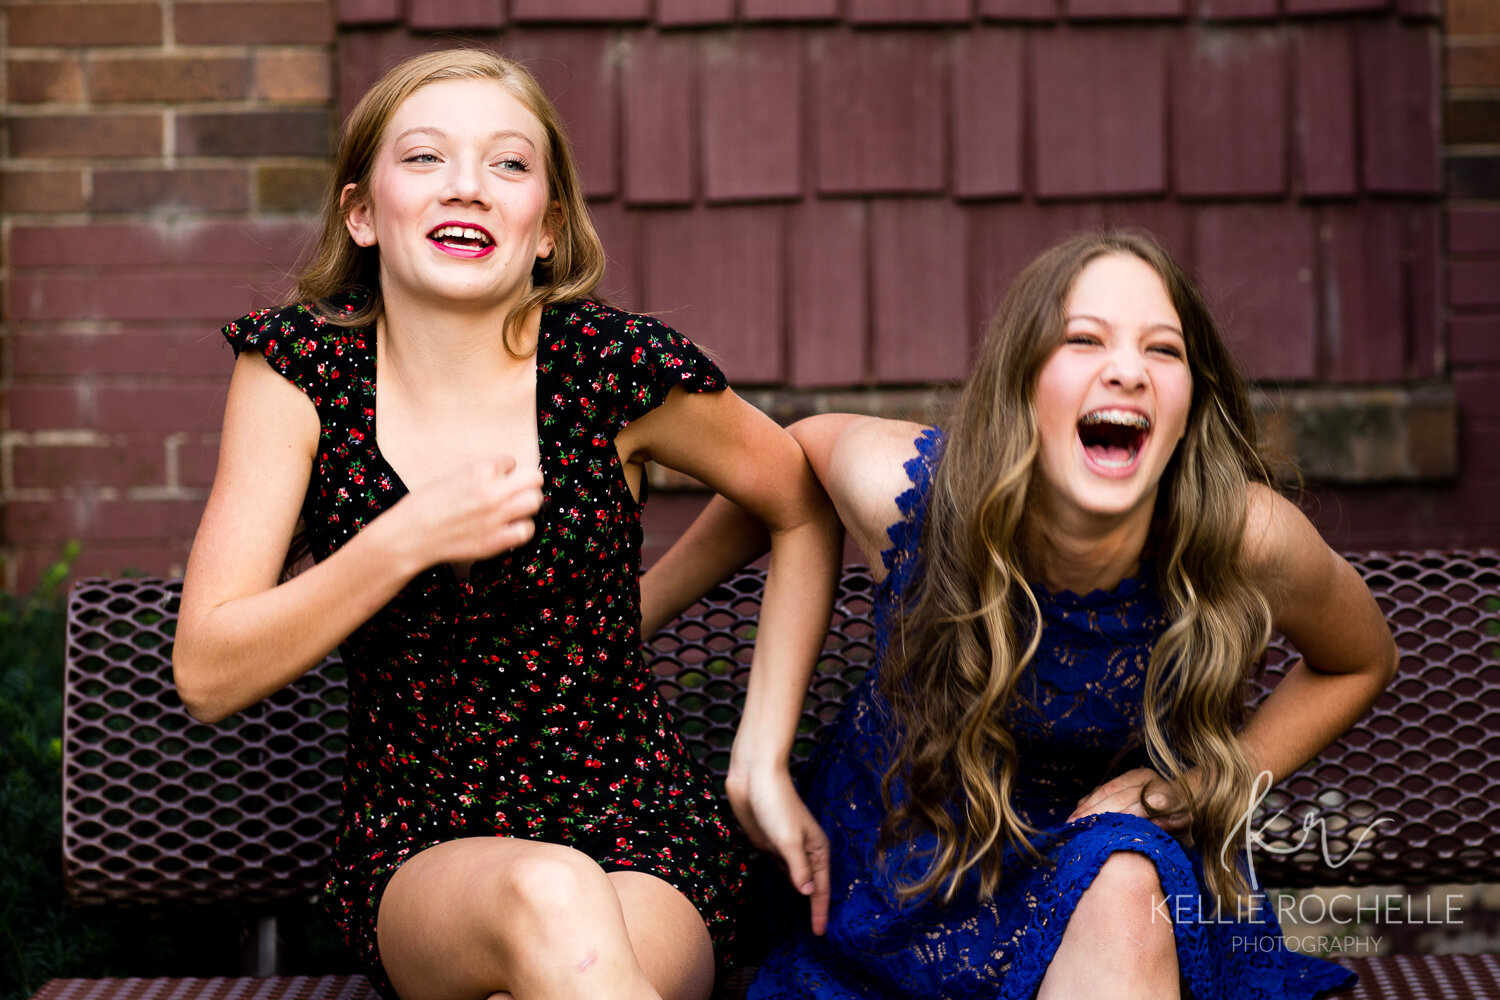 Girls laughing unposed